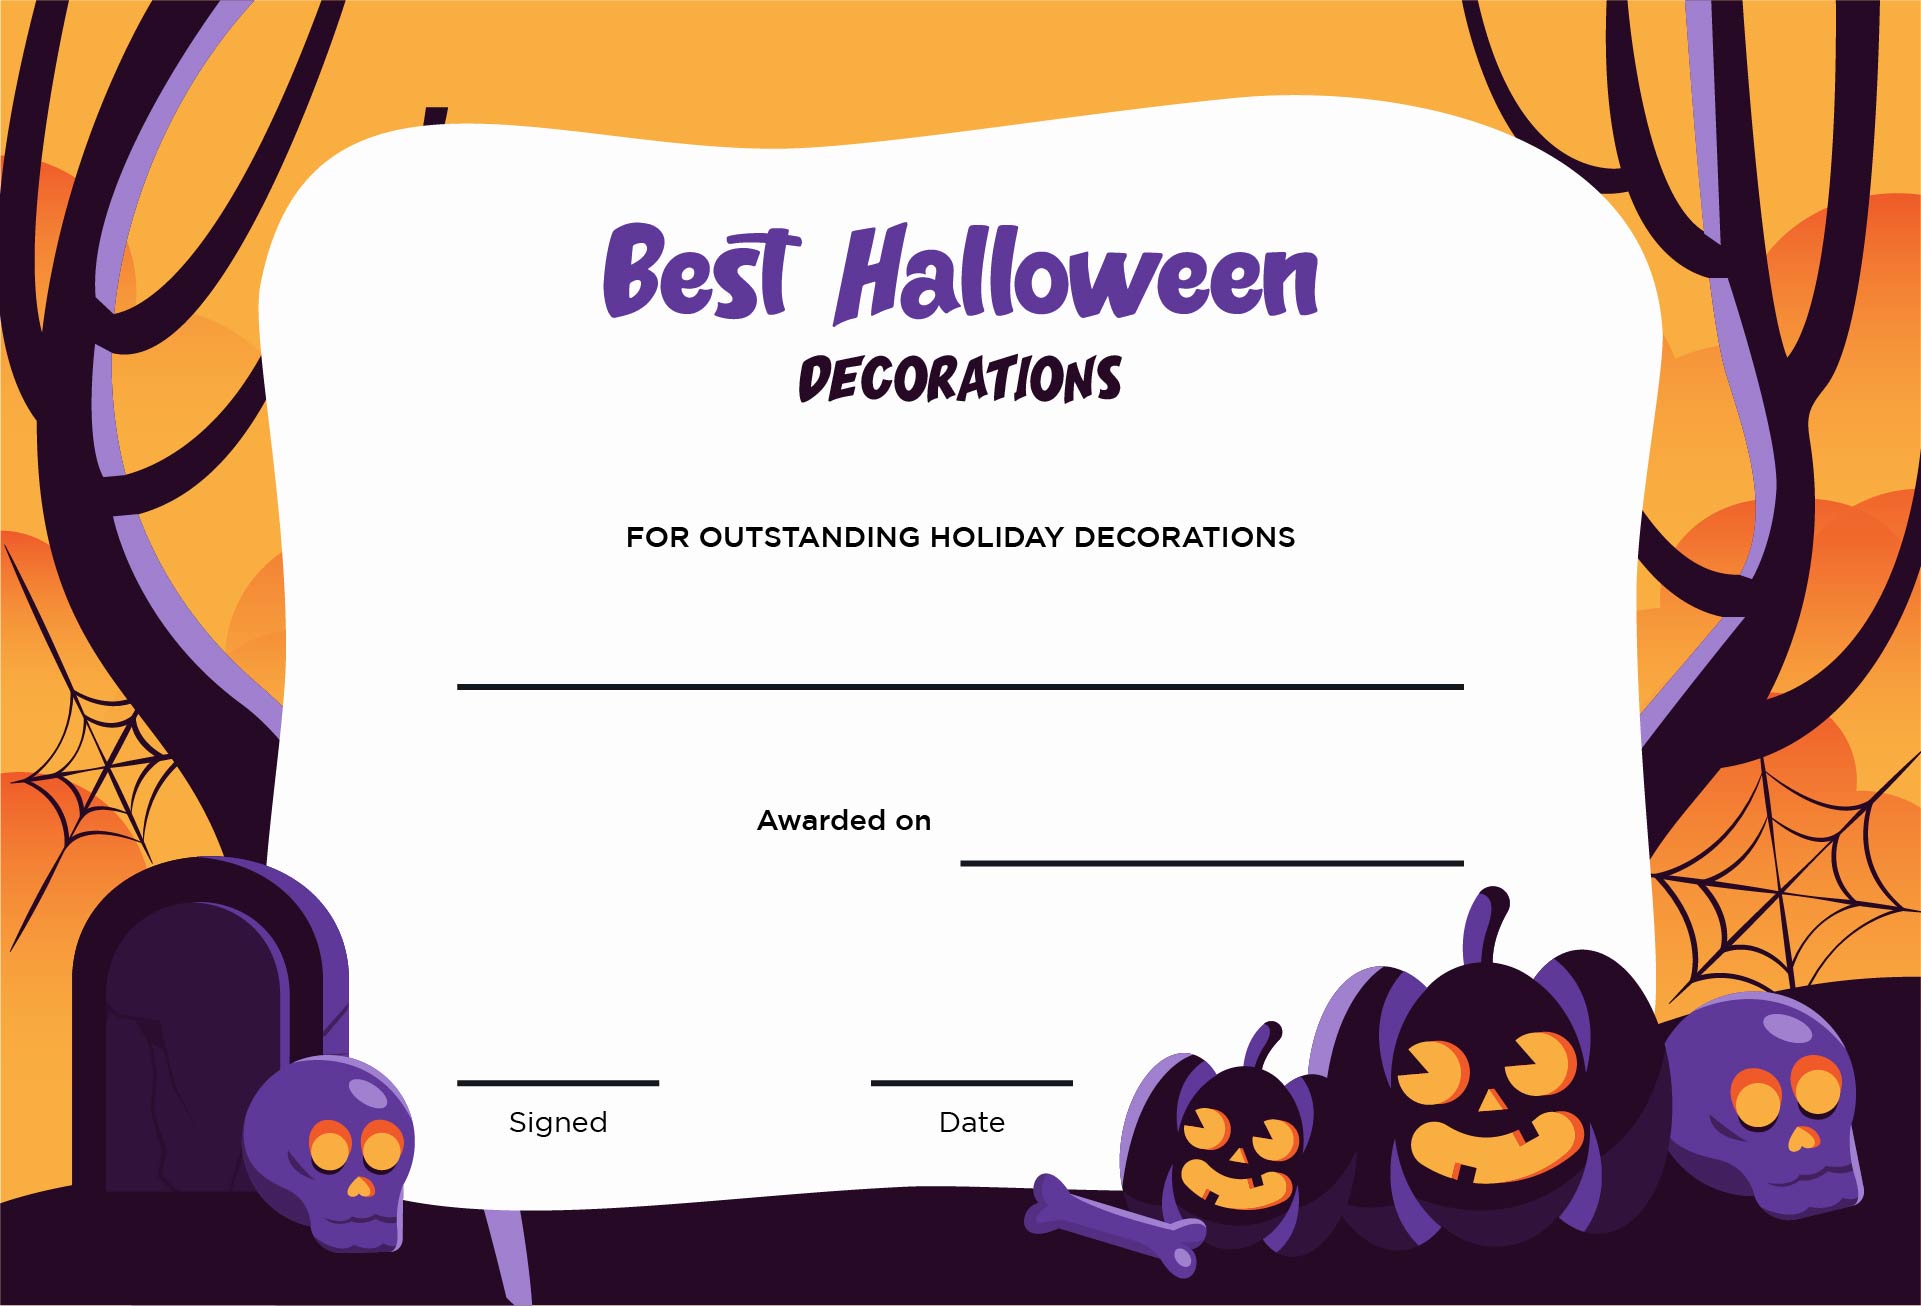 Best Halloween Decorations Printable Certificate